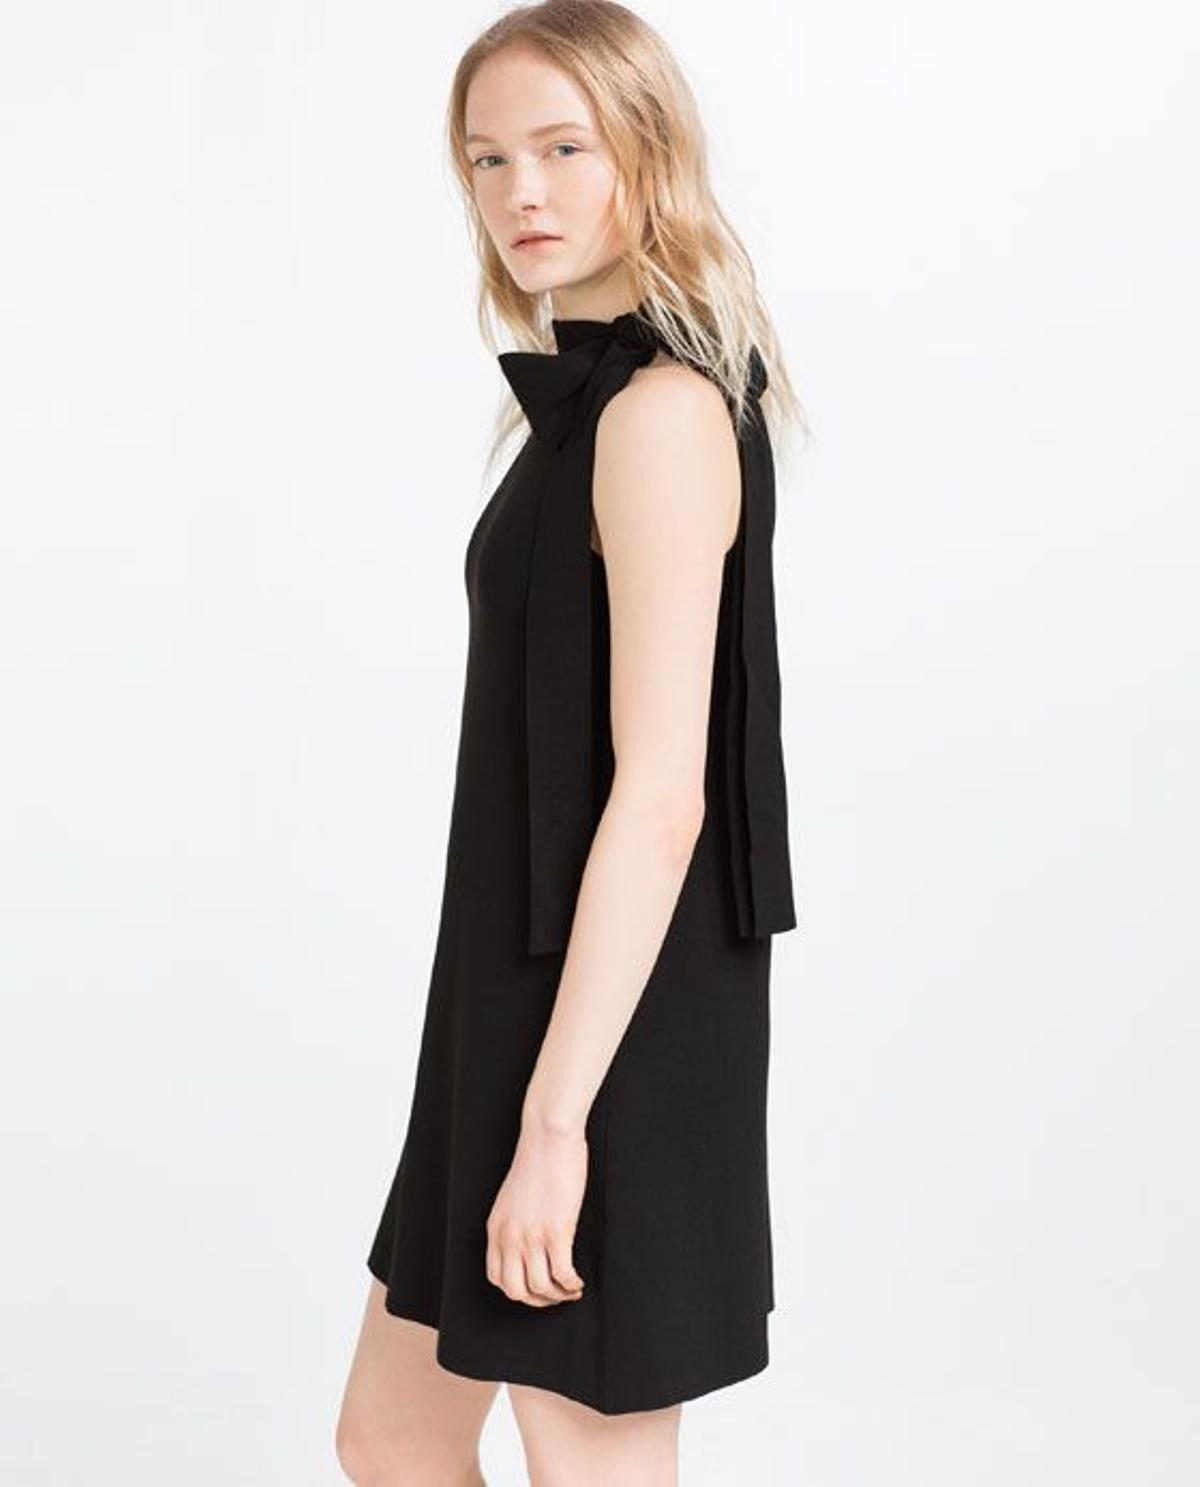 Vestido escote halter, Zara (29,95€)